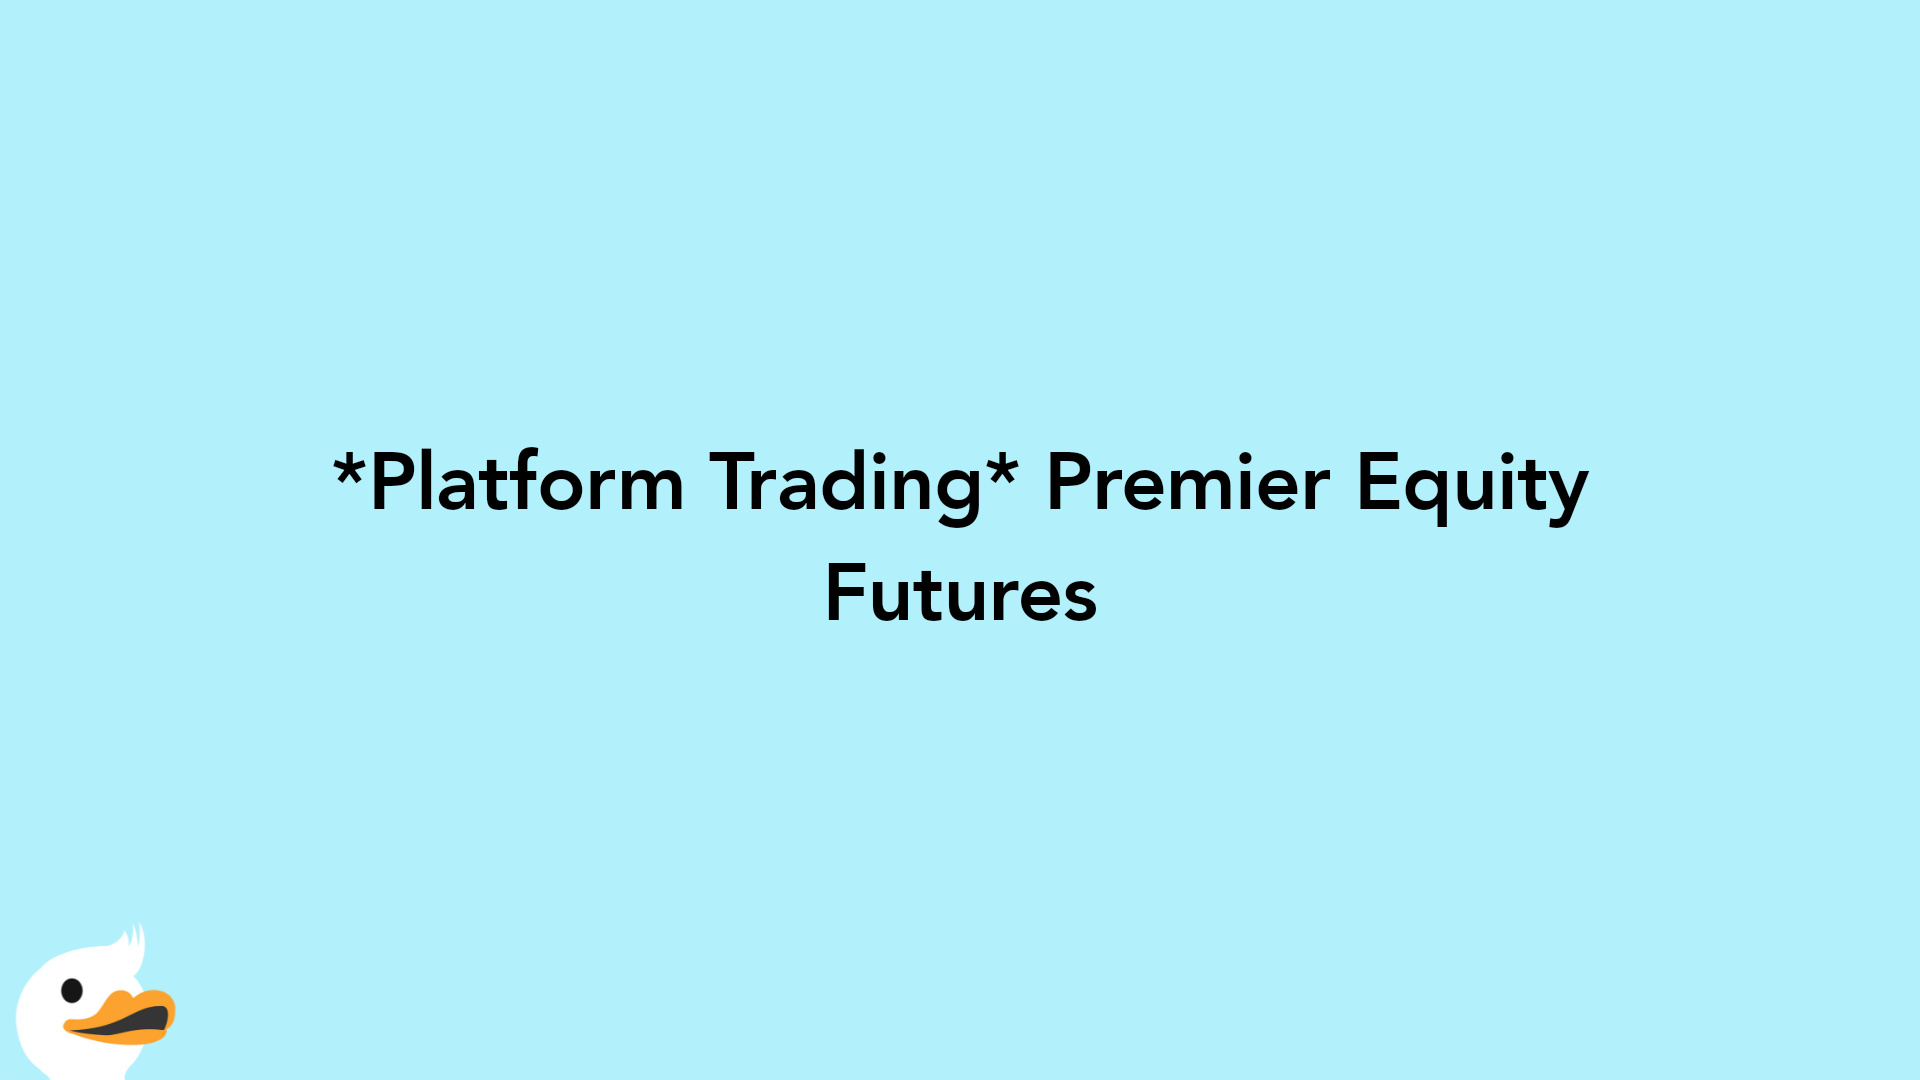 Platform Trading Premier Equity Futures